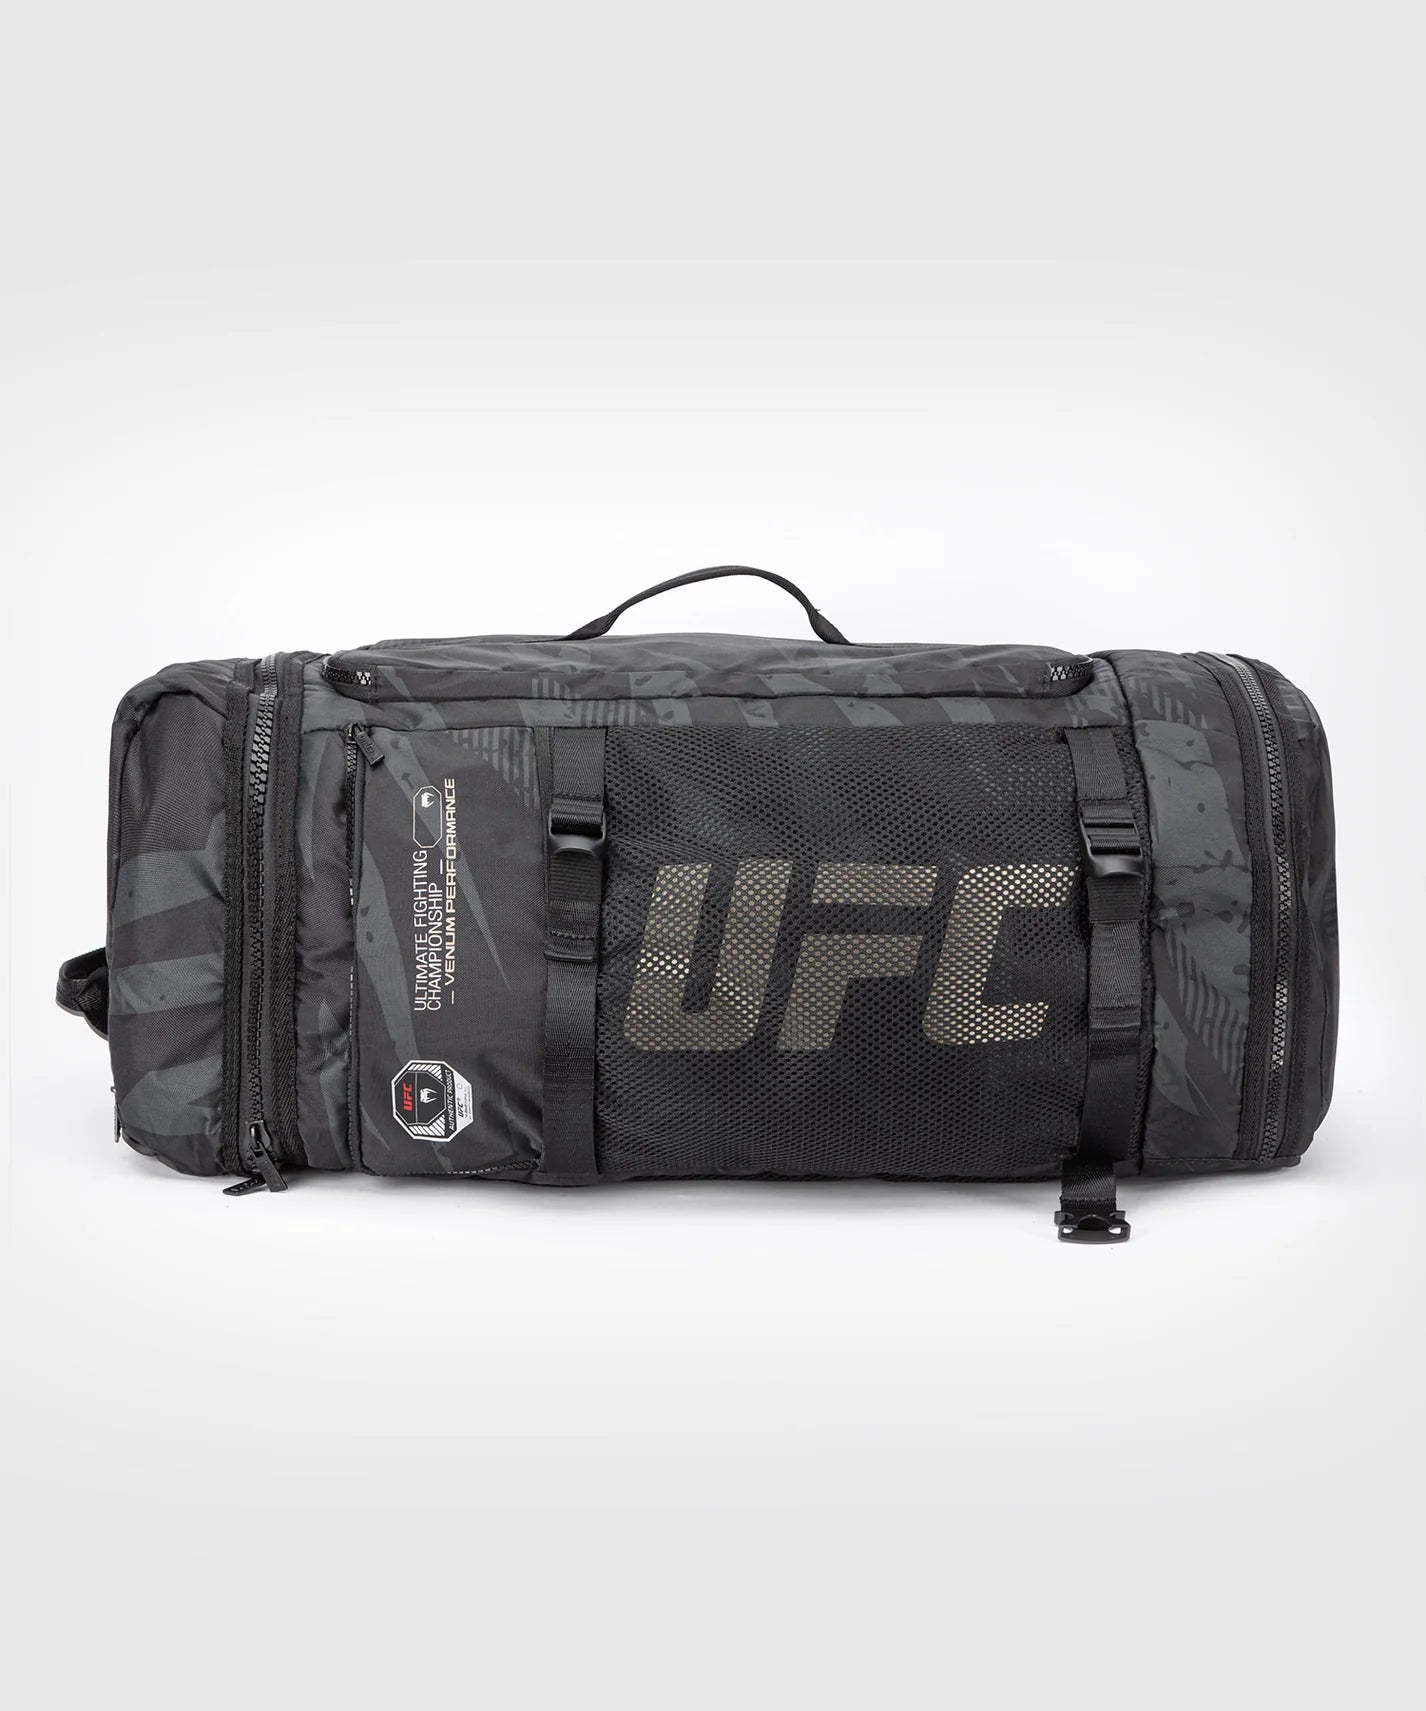 Sac de sport UFC Adrenaline by Venum Fight Week - Urban Camo